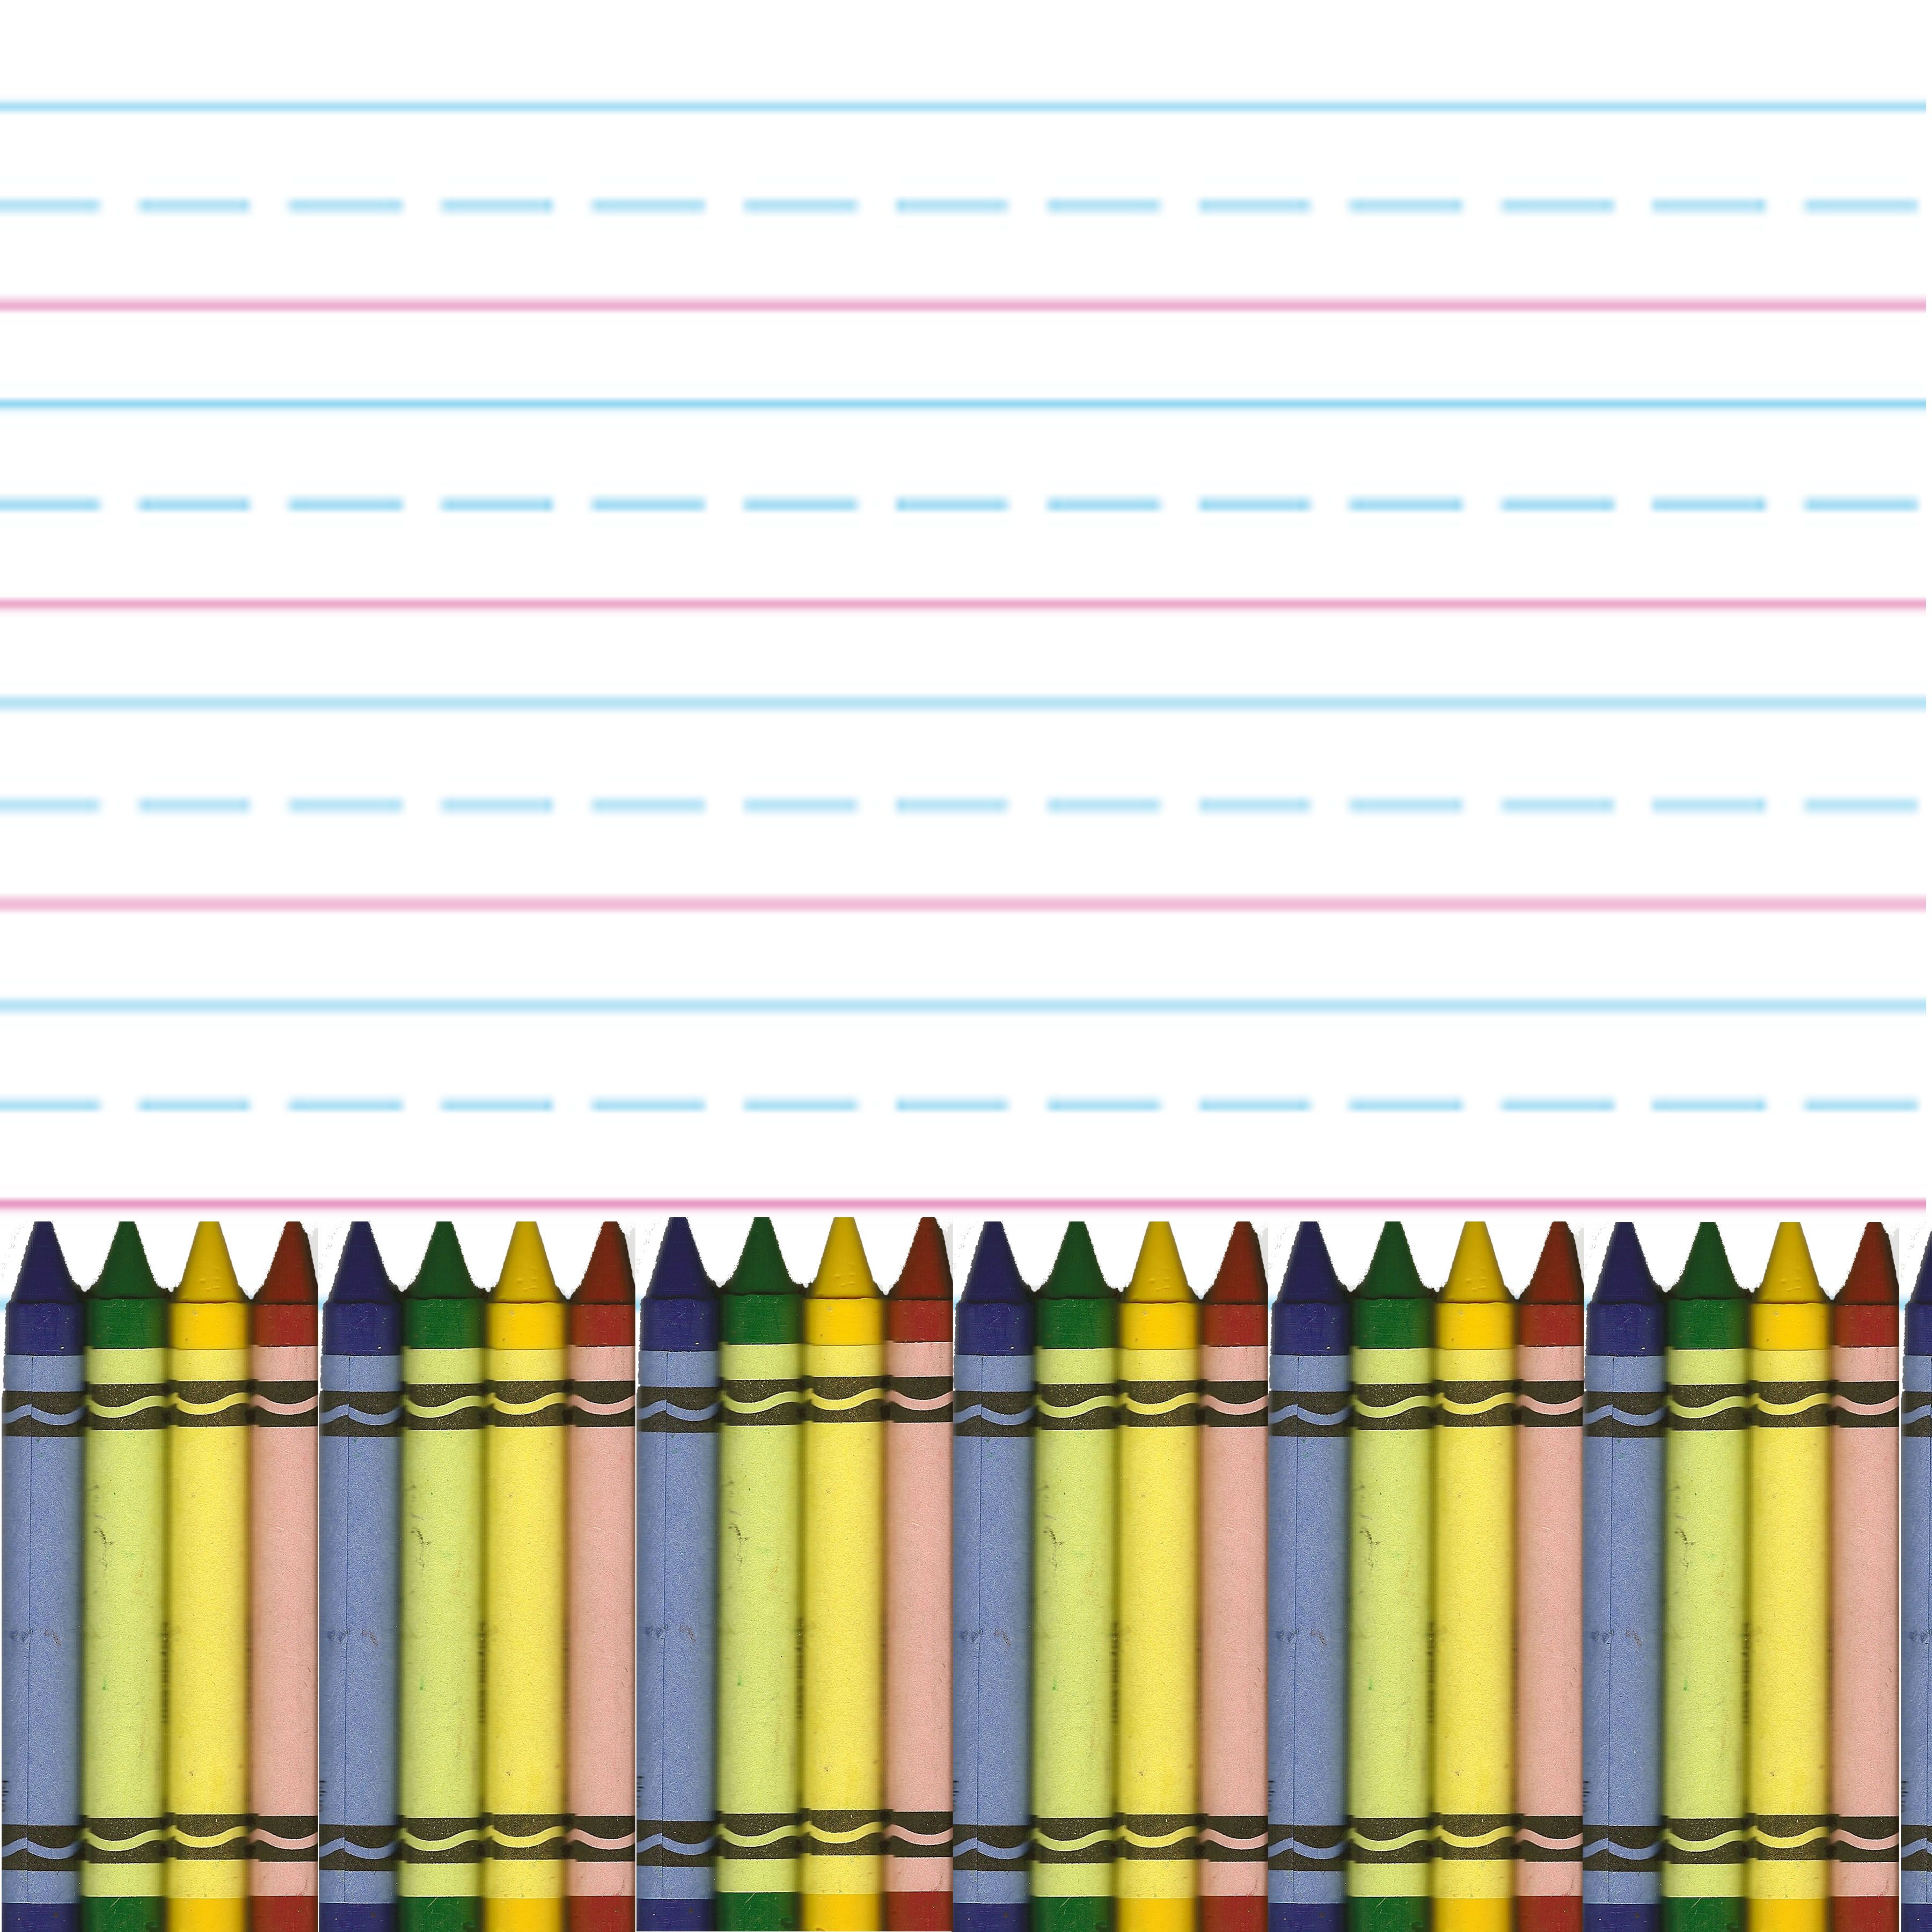 Colorful School Desktop Backgrounds